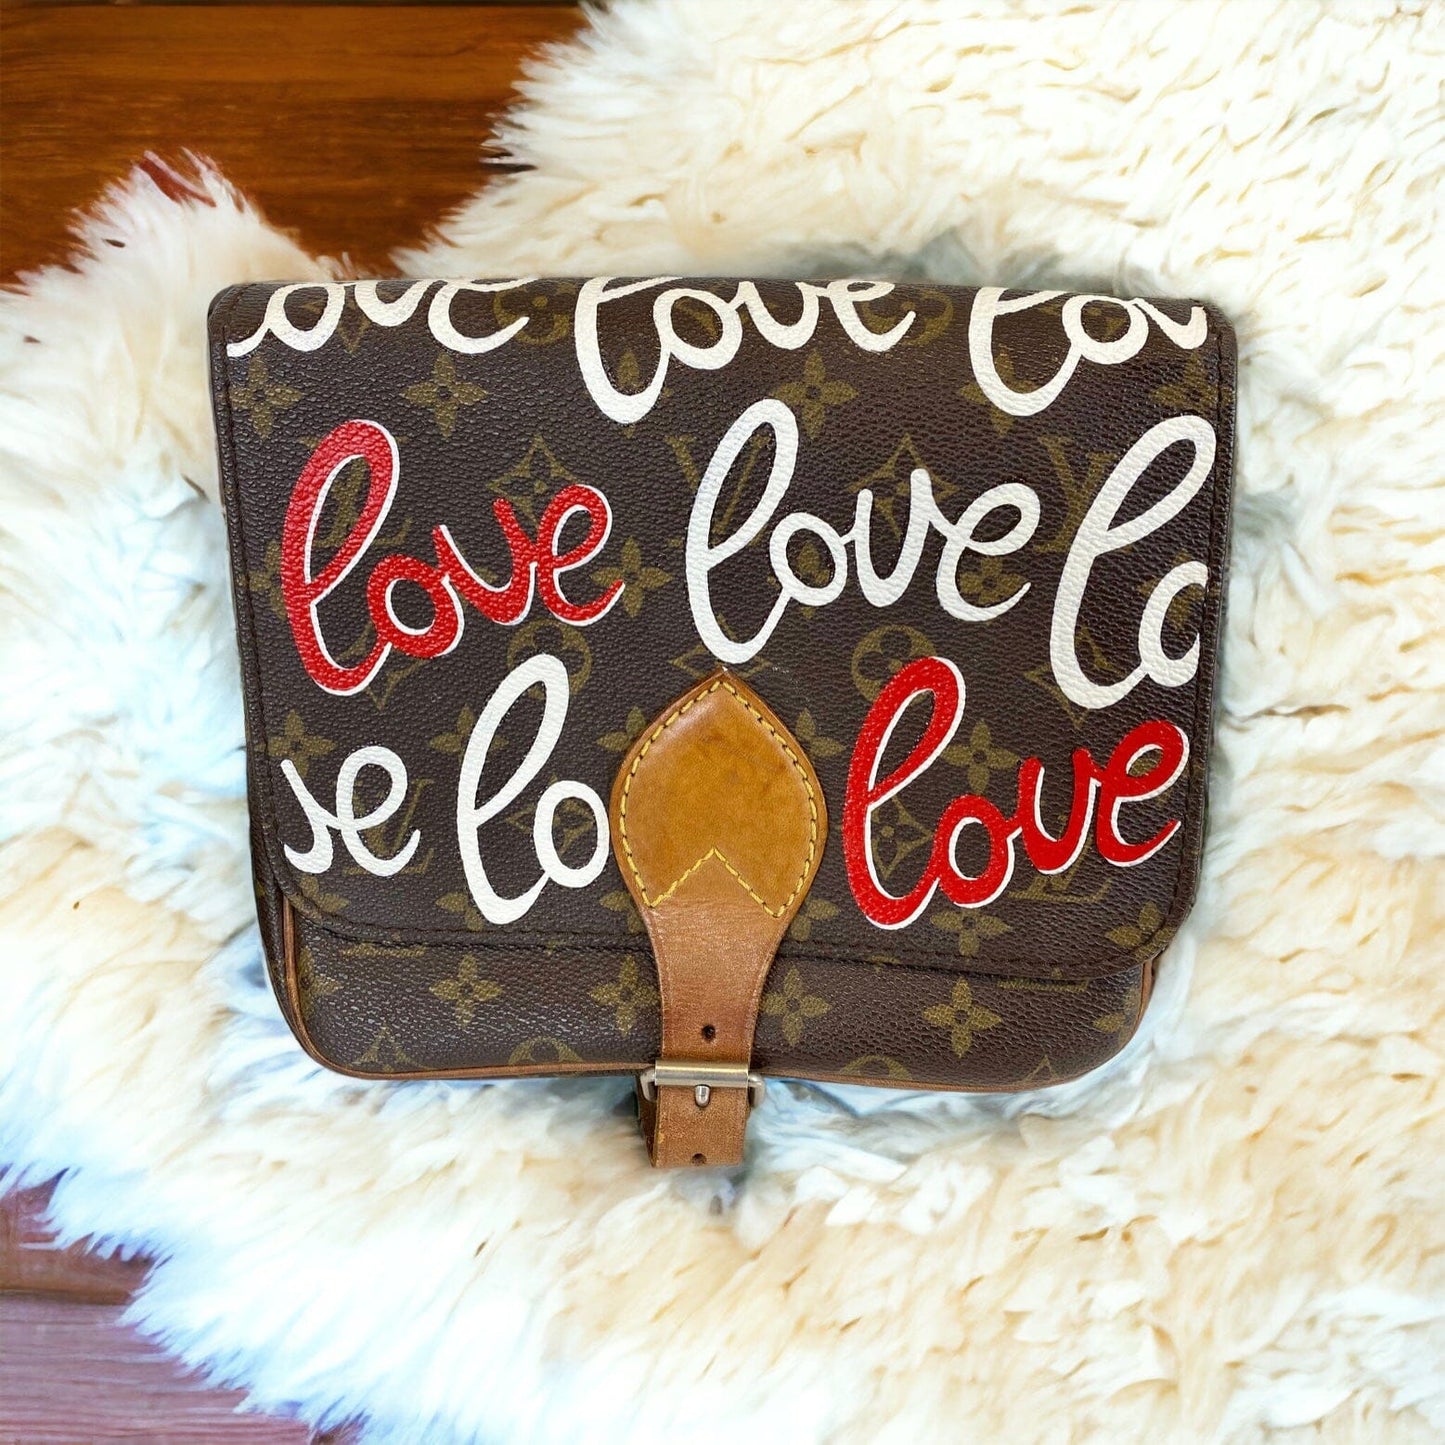 Louis Vuitton LV Cruise 2021 Heart Shaped Monogram Shoulder Bag